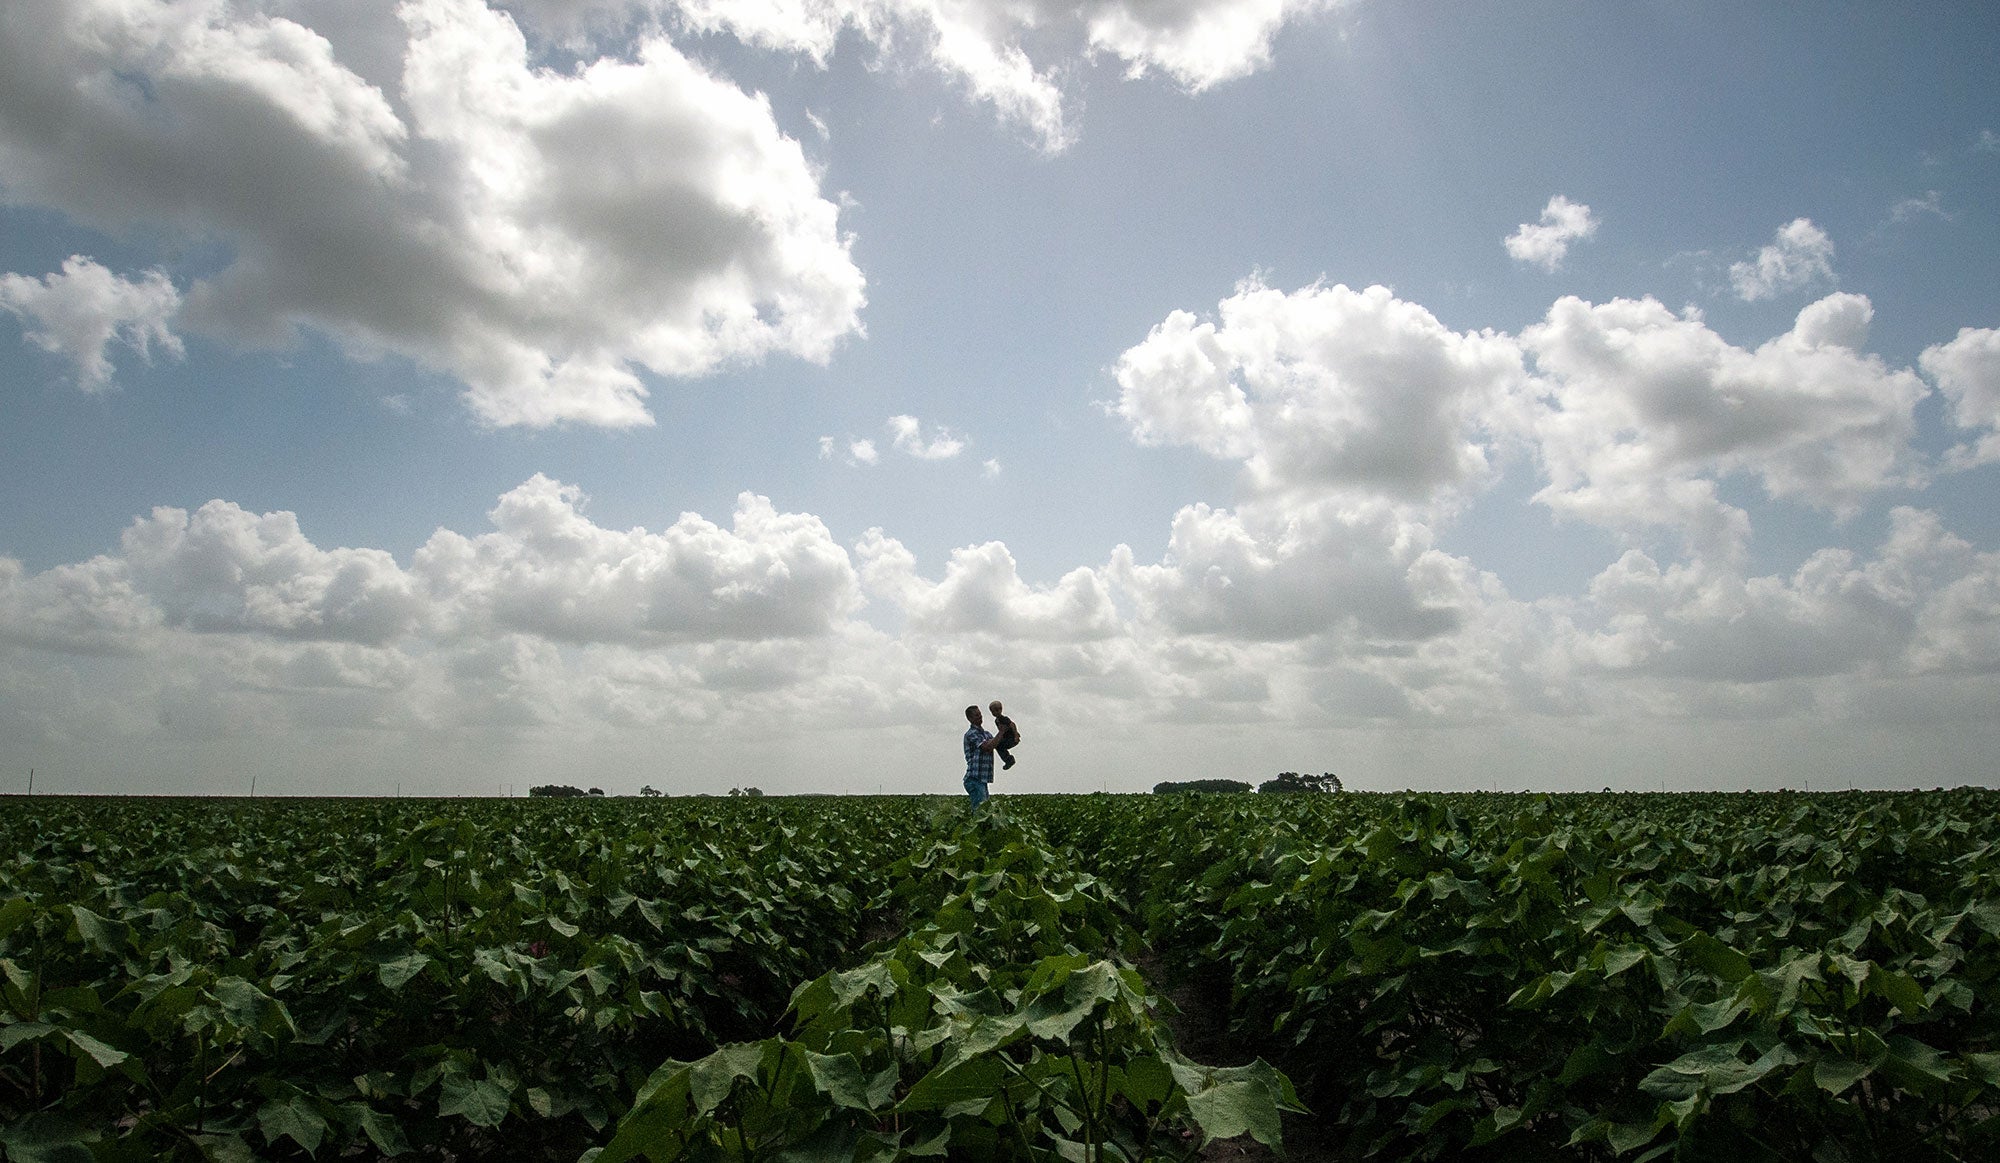 A father and son walk through a cotton field in El Campo, Texas.